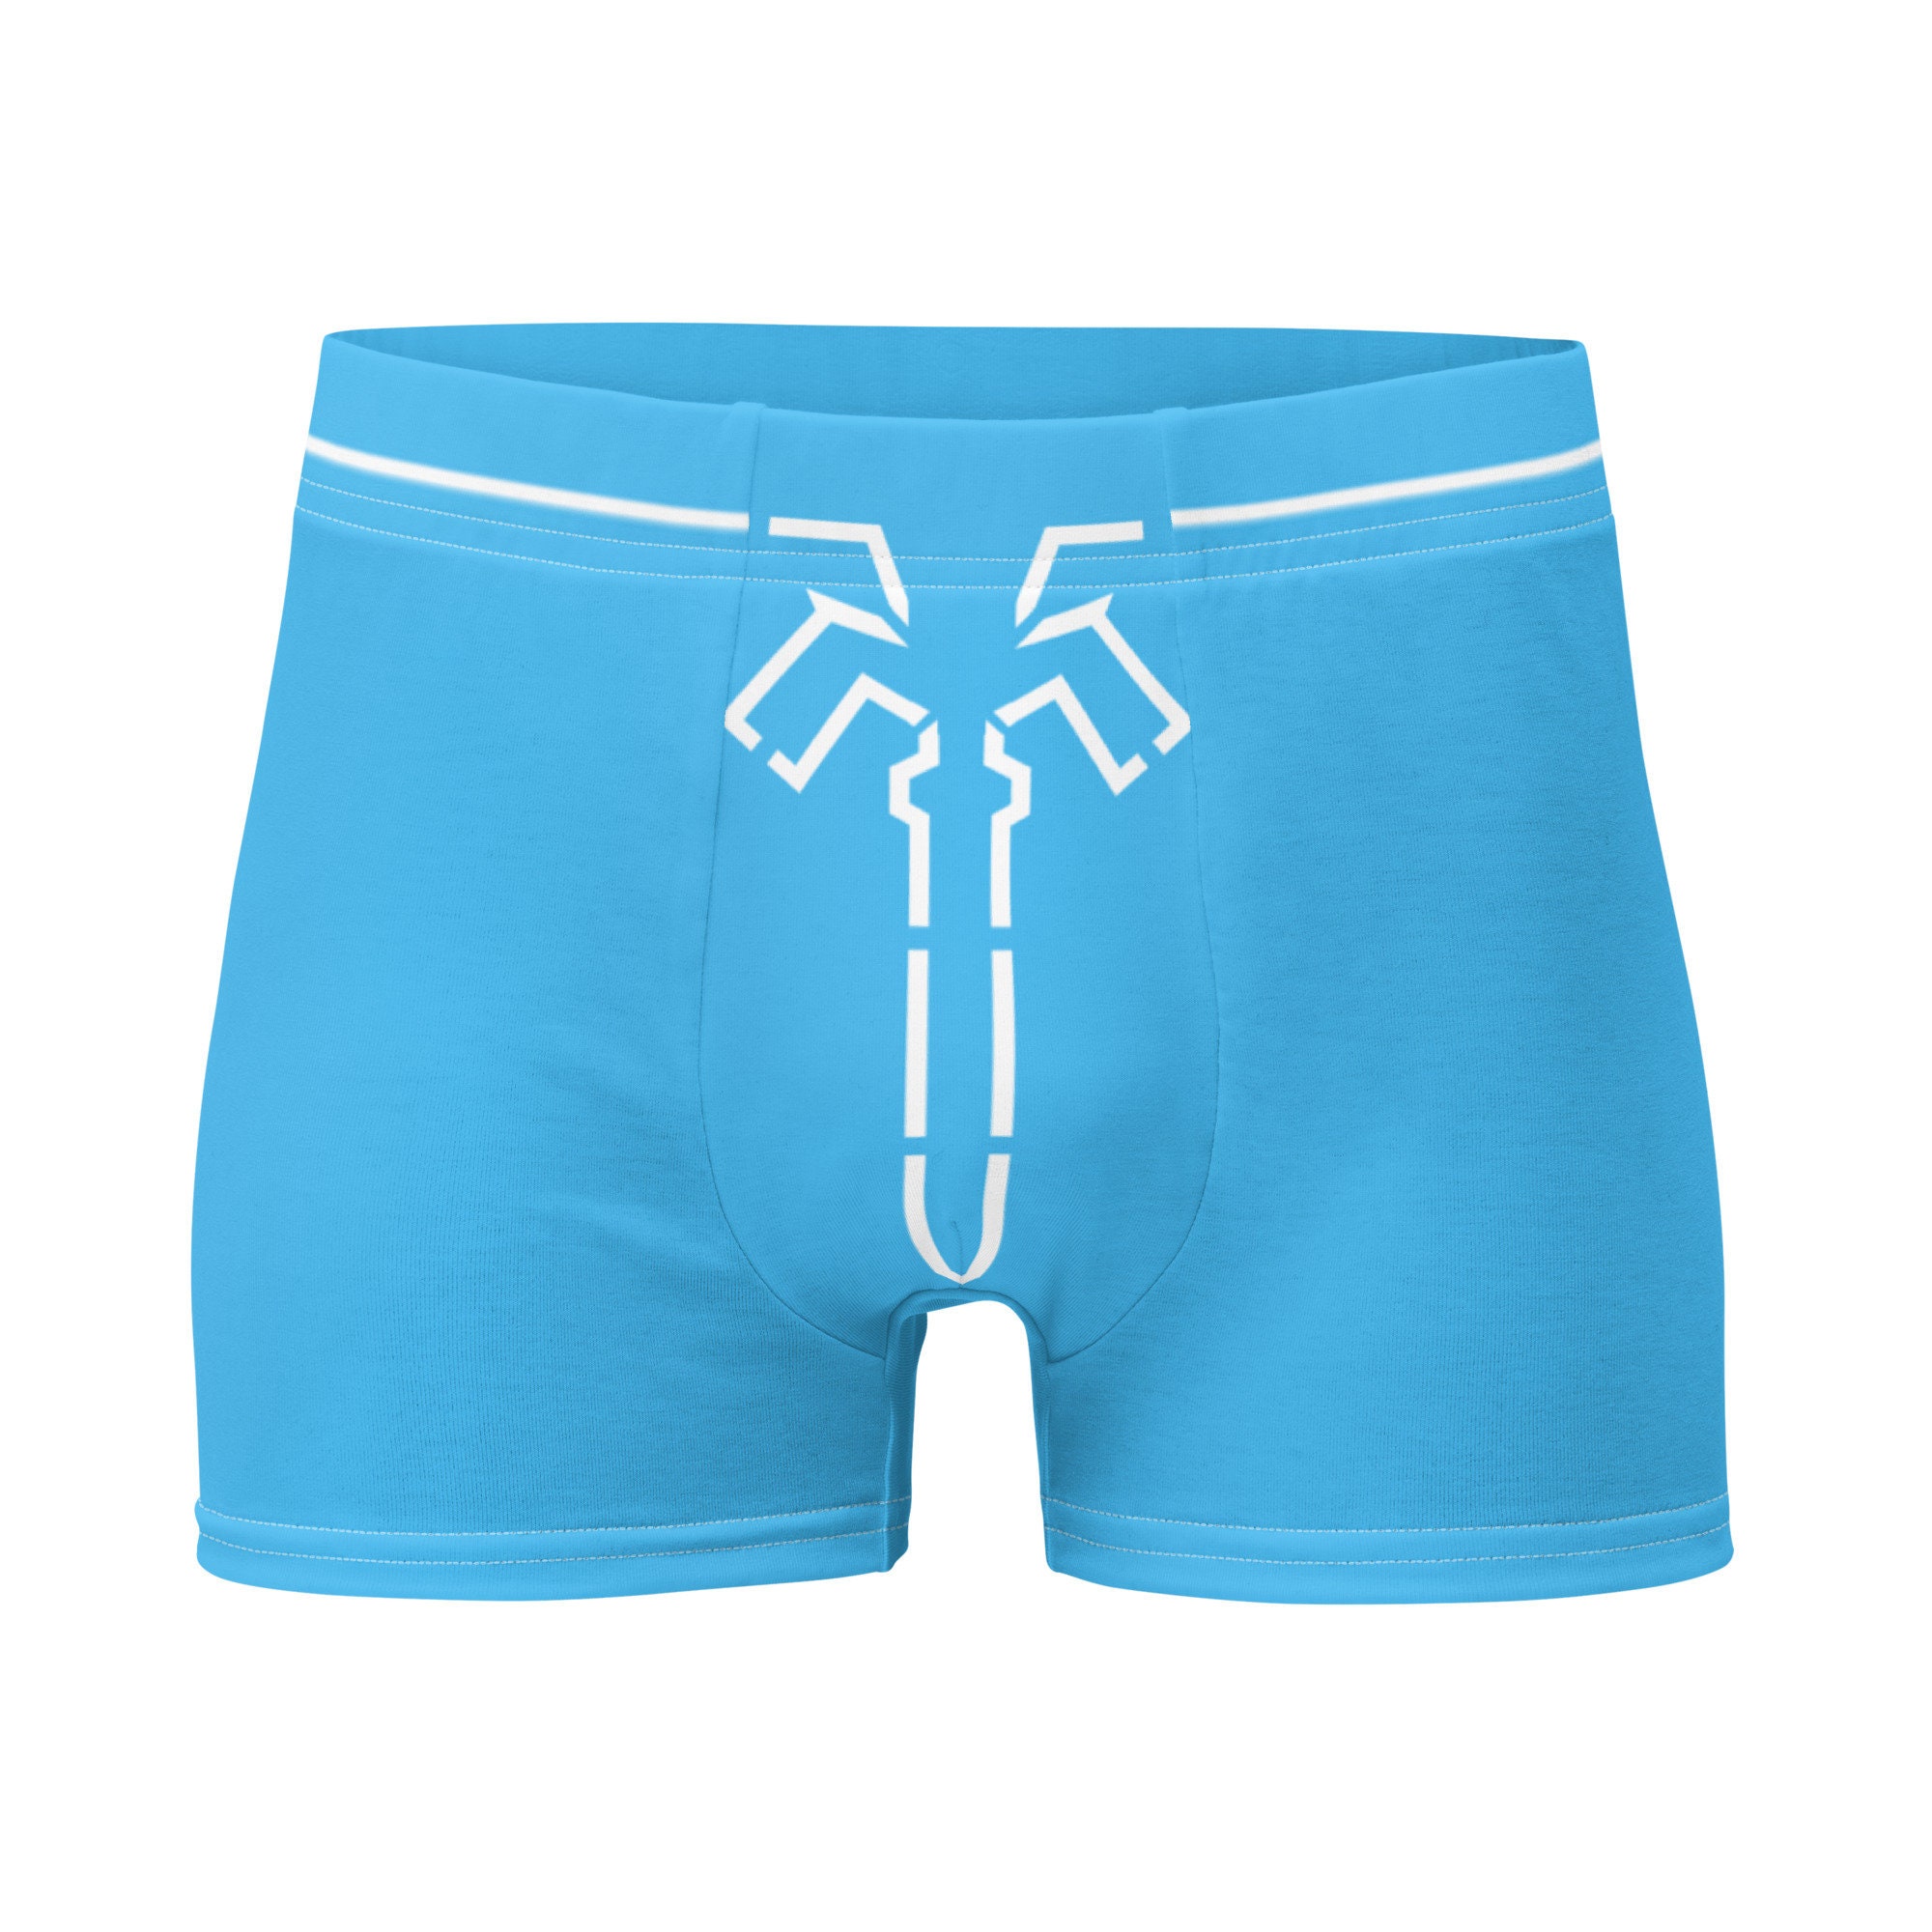 Novelty The Legend Of Zeldas Link Boxers Shorts Panties Male Underpants  Breathbale Video Game Briefs Underwear